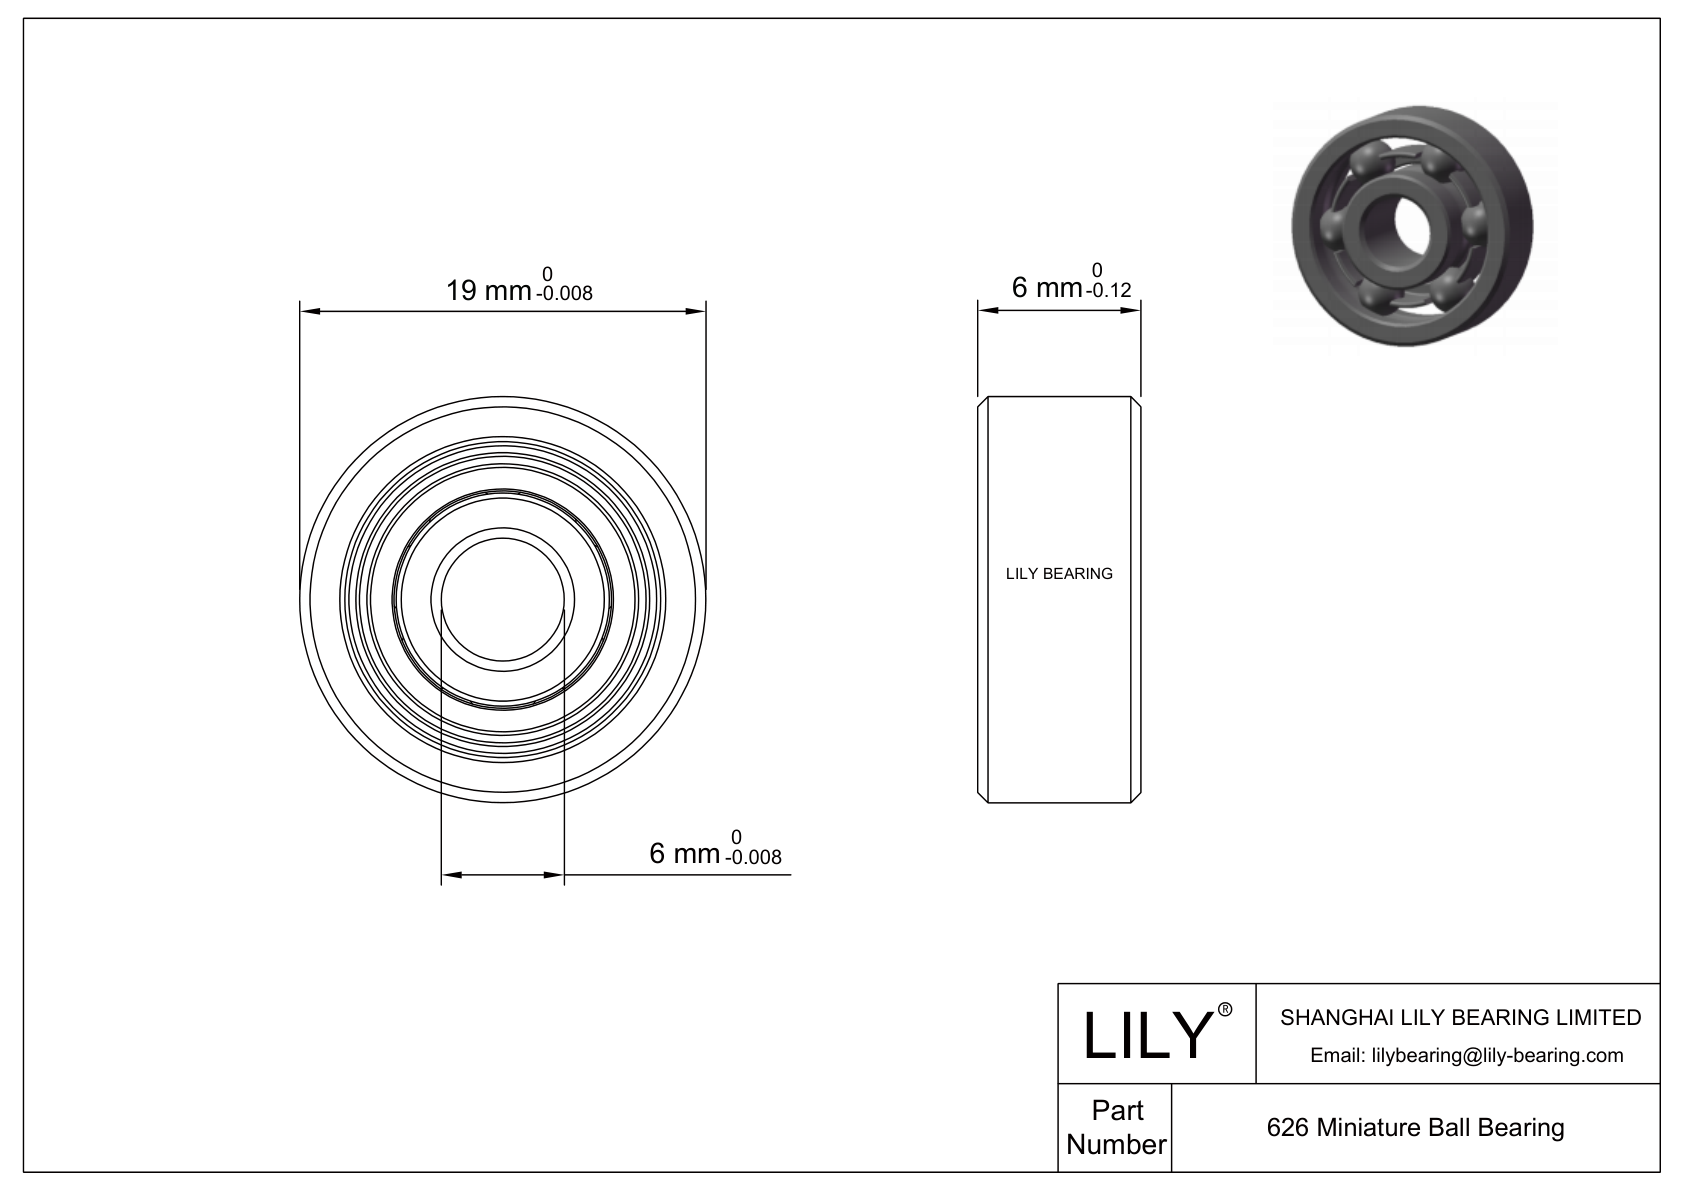 LILY-PU62625-18 Polyurethane Coated Bearing cad drawing